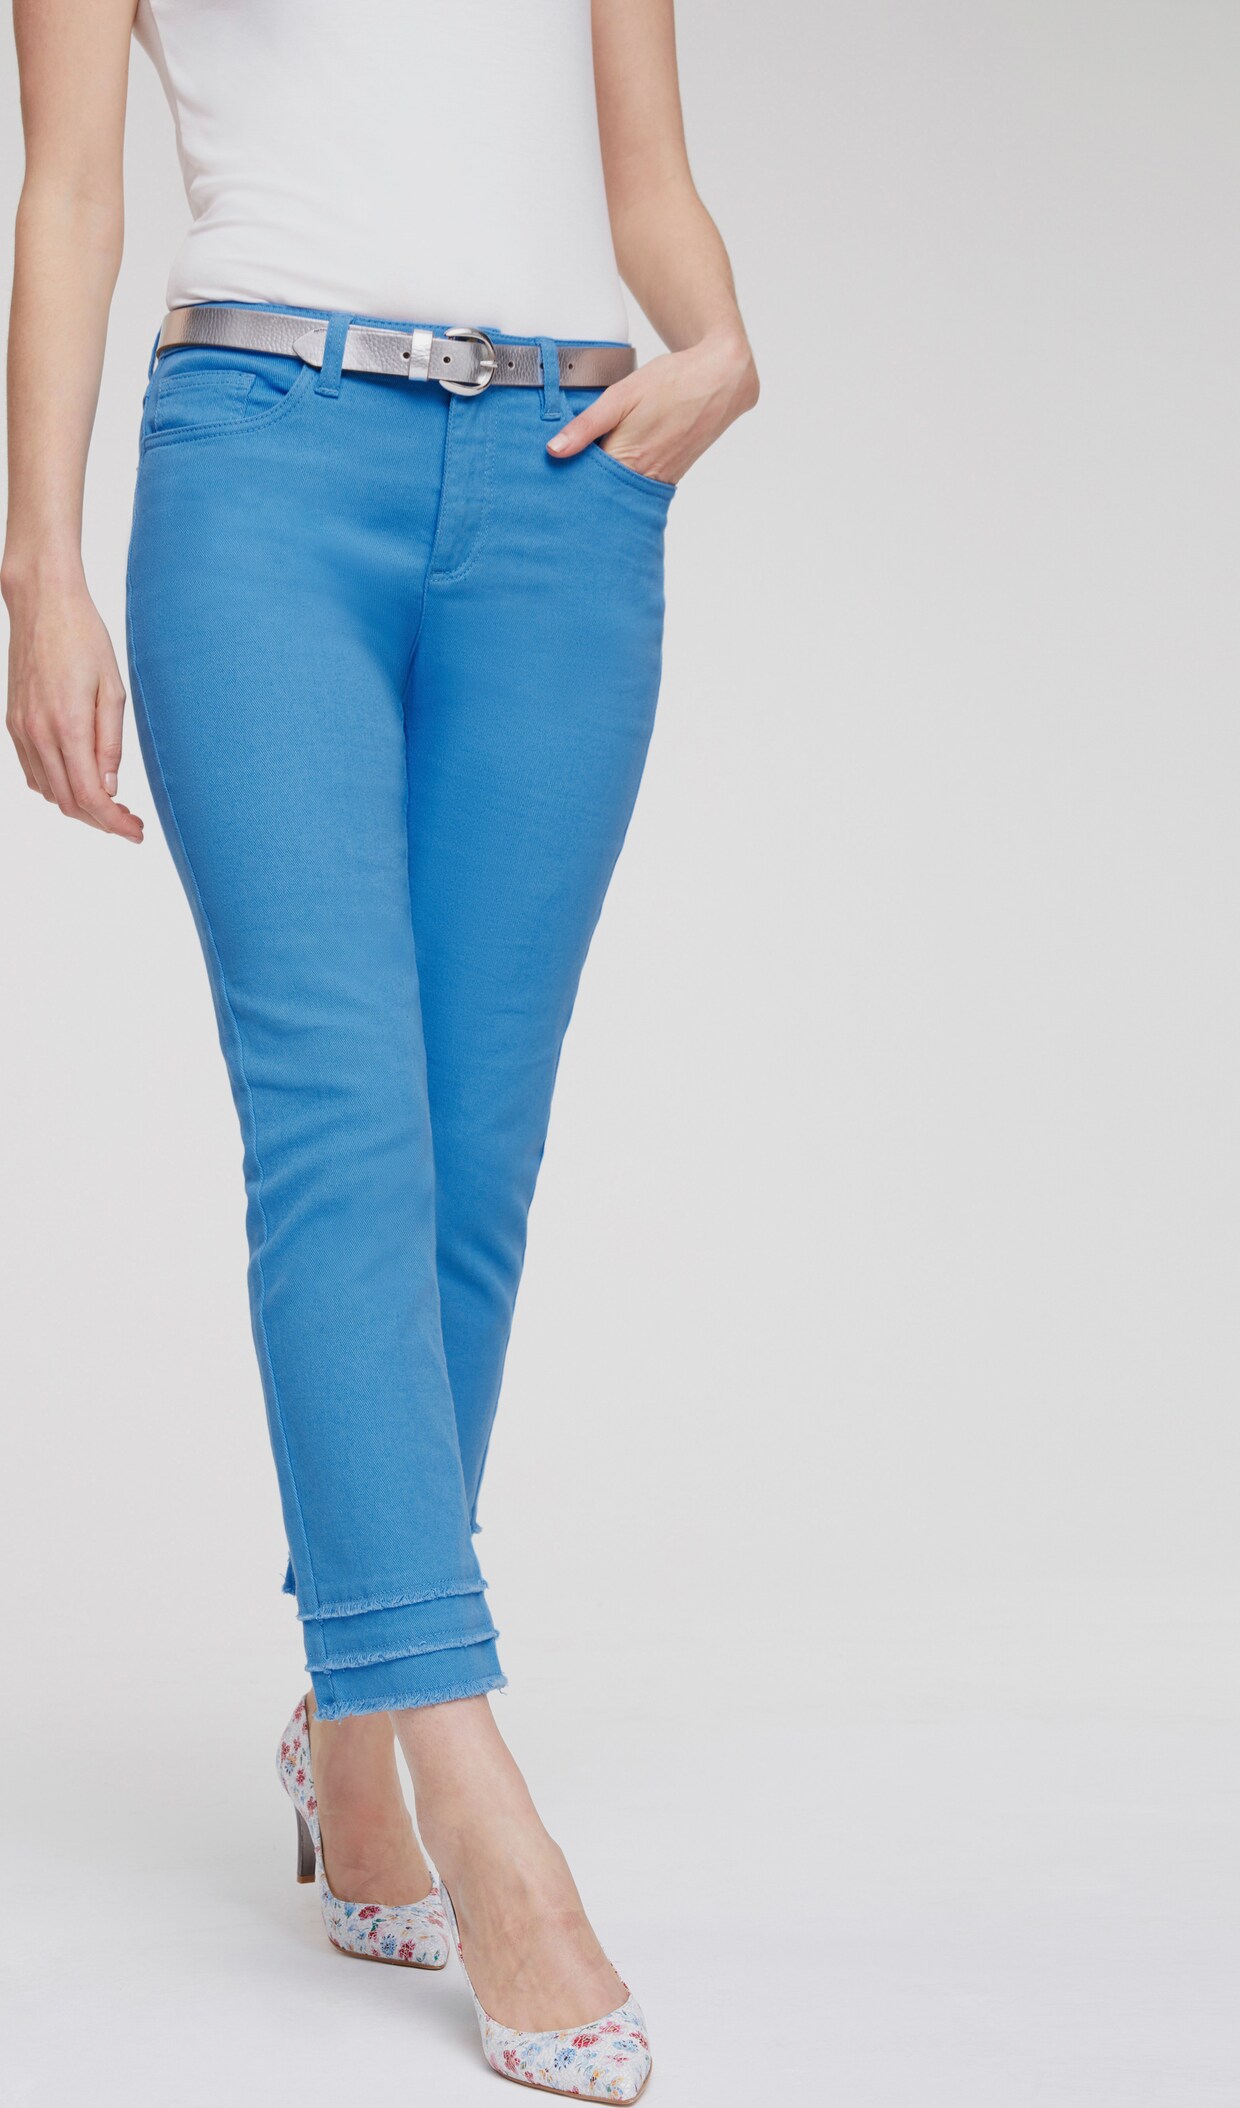 heine Jeans - azurblau